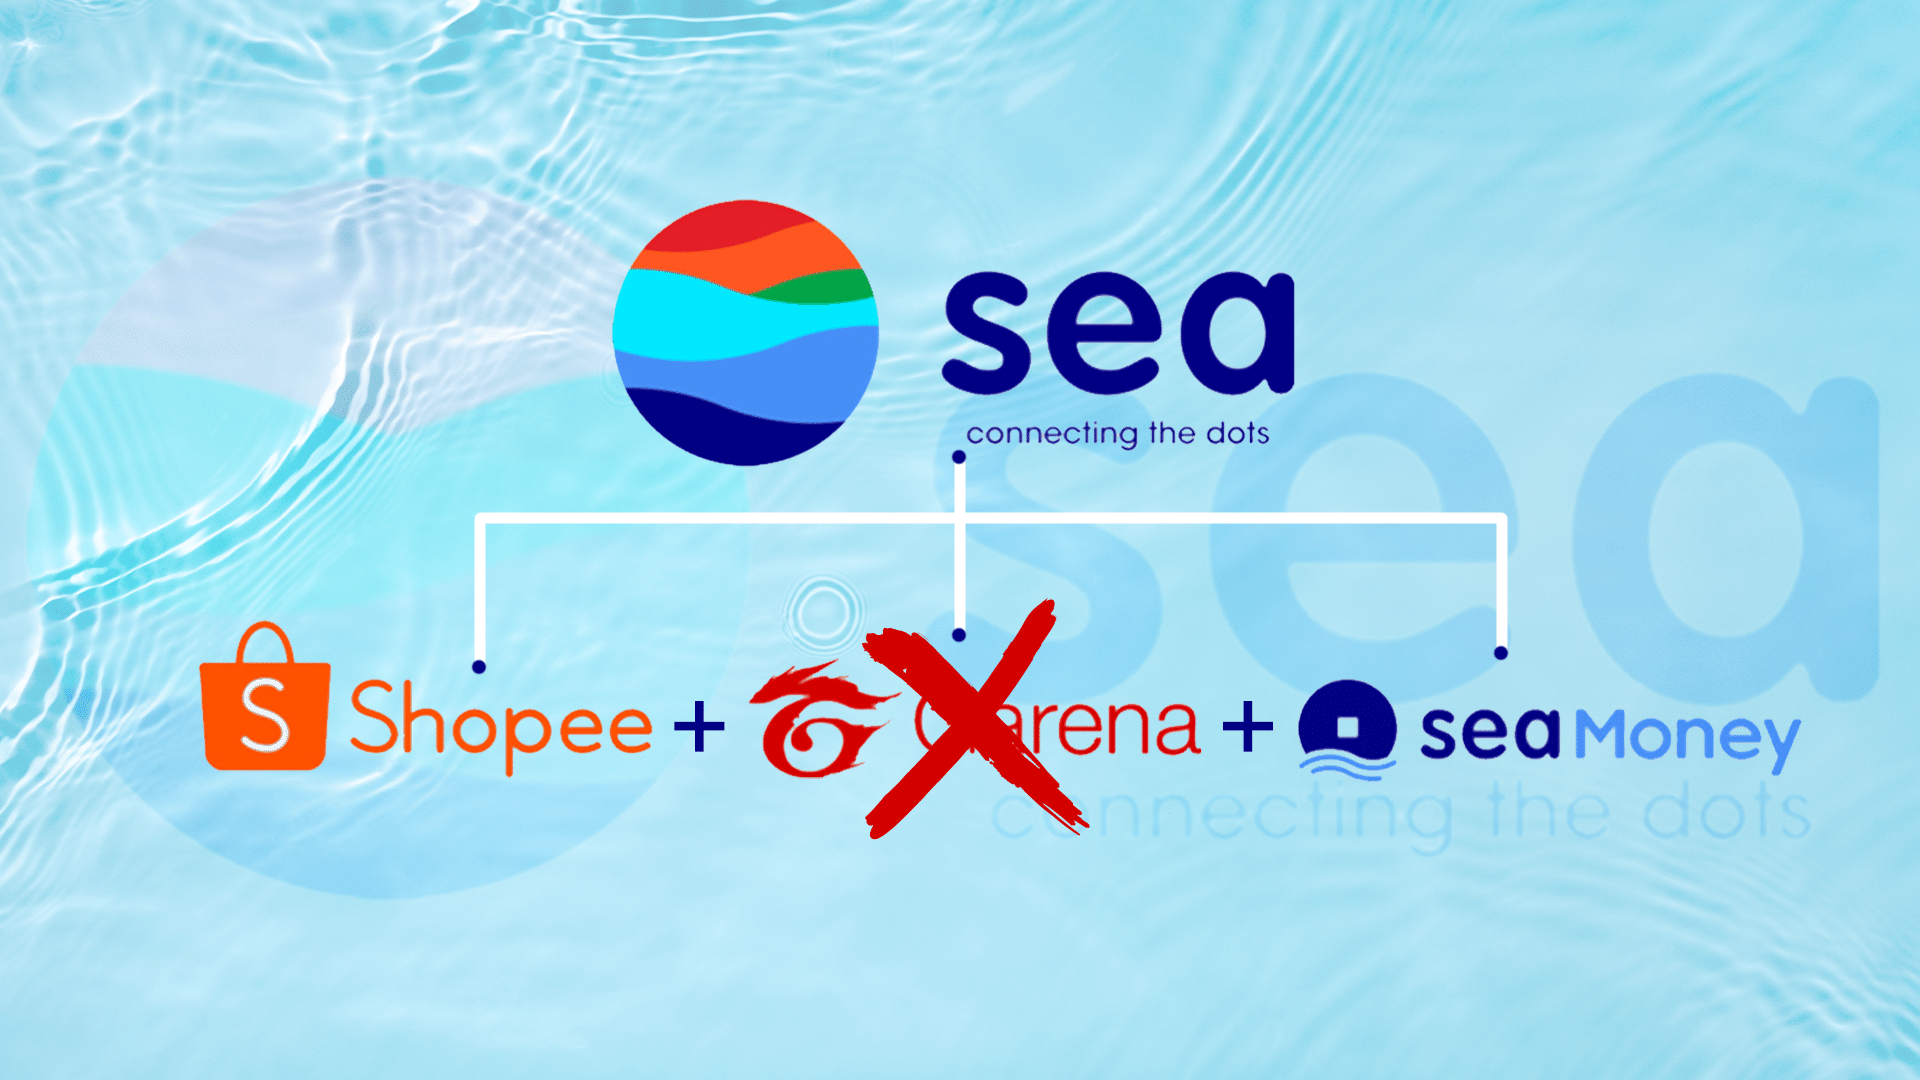 Sea Limited (SE) Stock: Has the 3 Headed-Dragon Lost Its Magic?